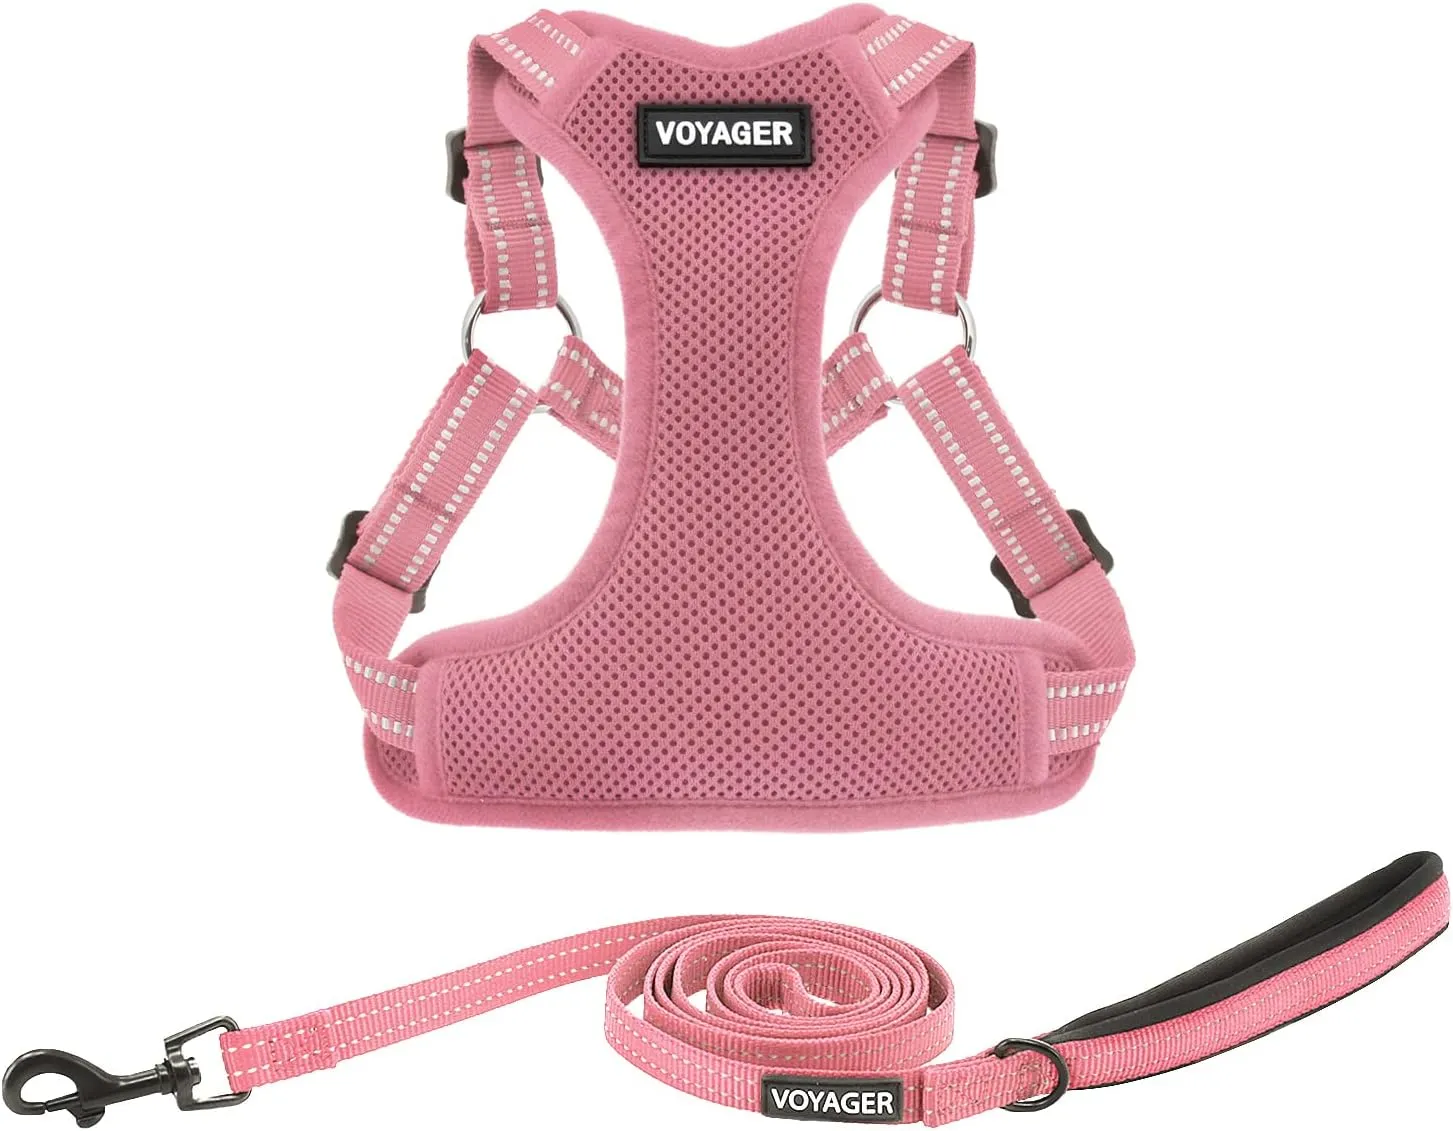 Best Pet Supplies Voyager Adjustable Dog Harness Leash Set with Reflective Stripes for Walking